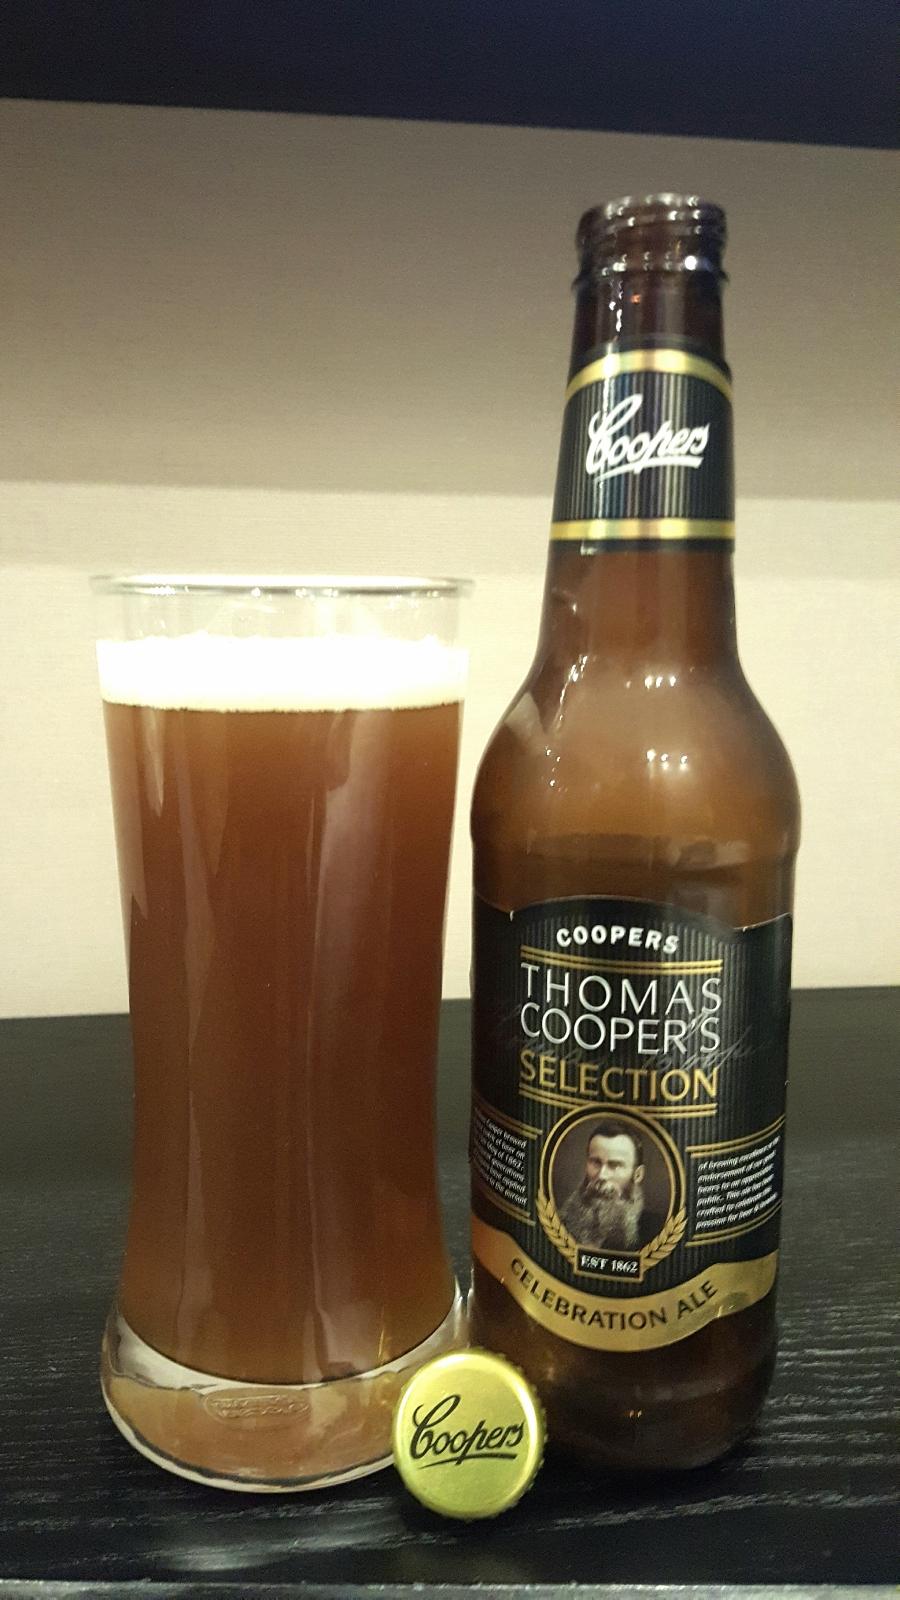 Thomas Coopers Selection Celebration Ale